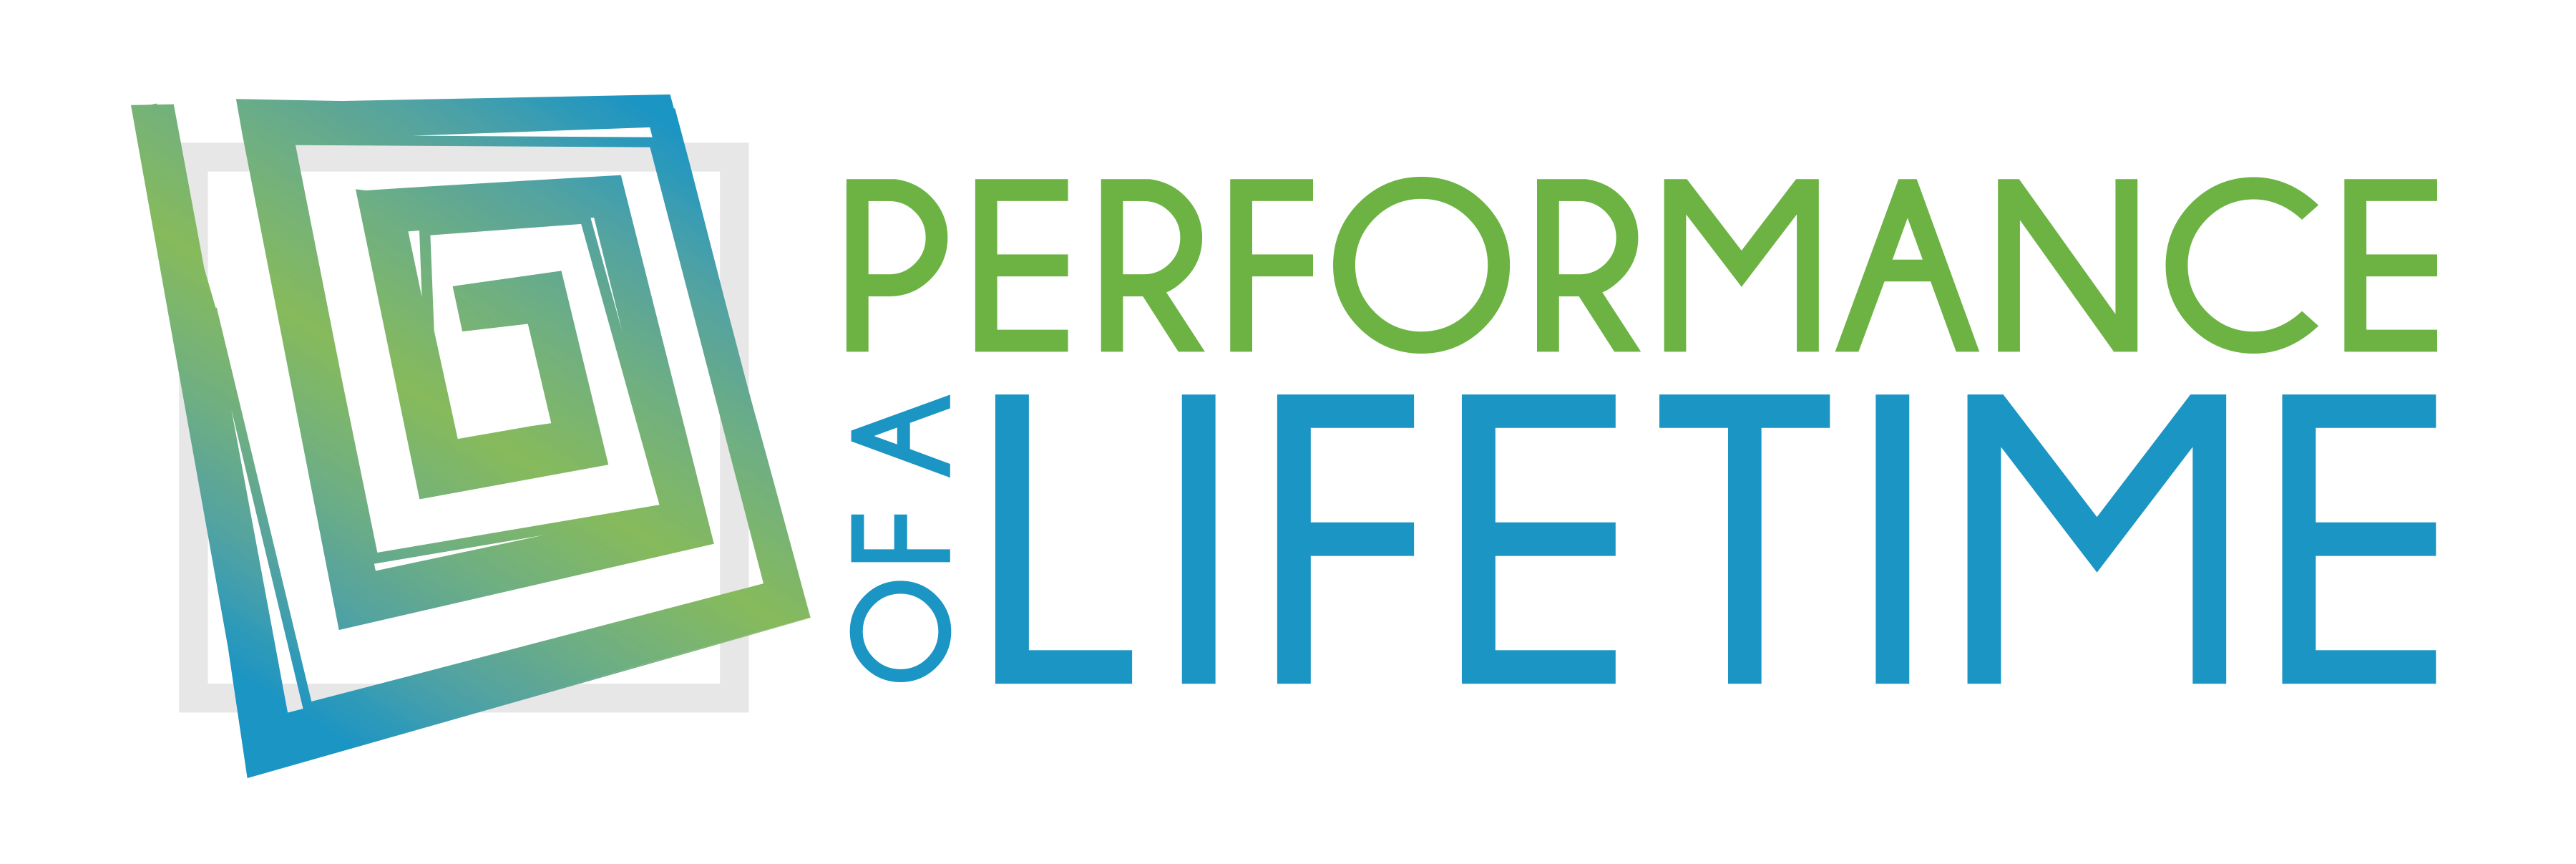 Performance of a Lifetime | Leadership Training